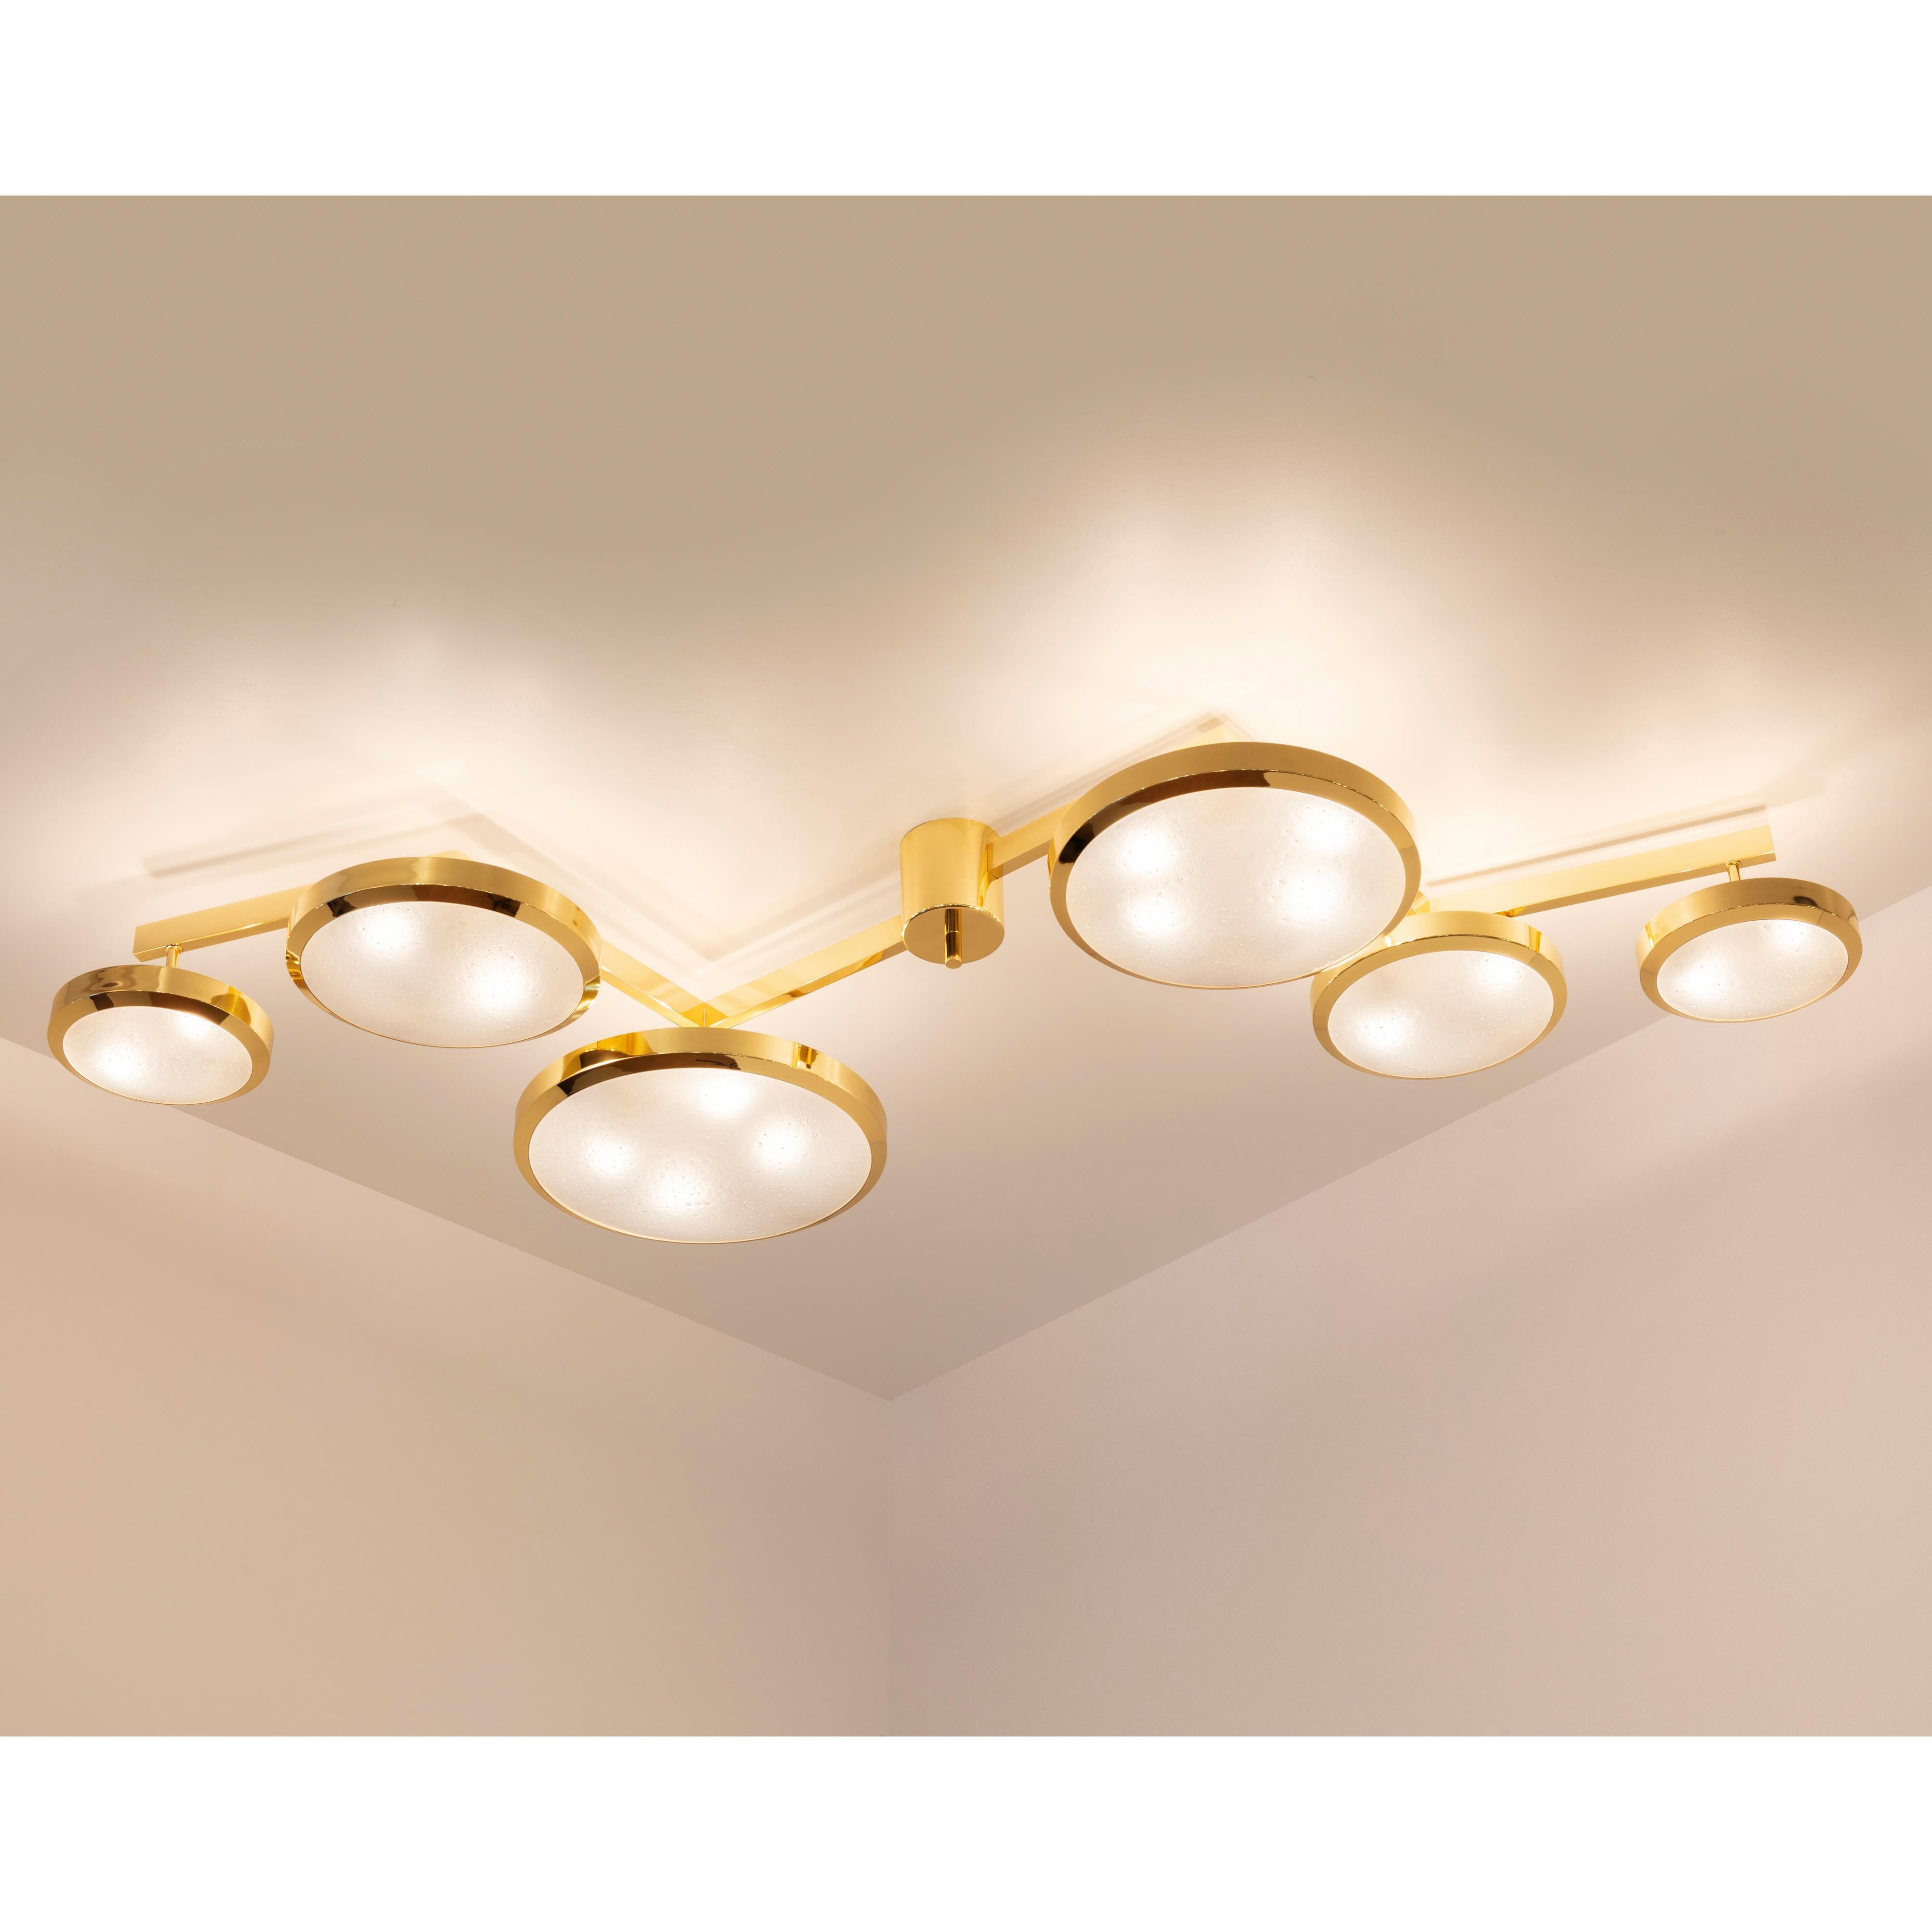 Geometria Sospesa Ceiling Light by Gaspare Asaro - Polished Brass For Sale 6